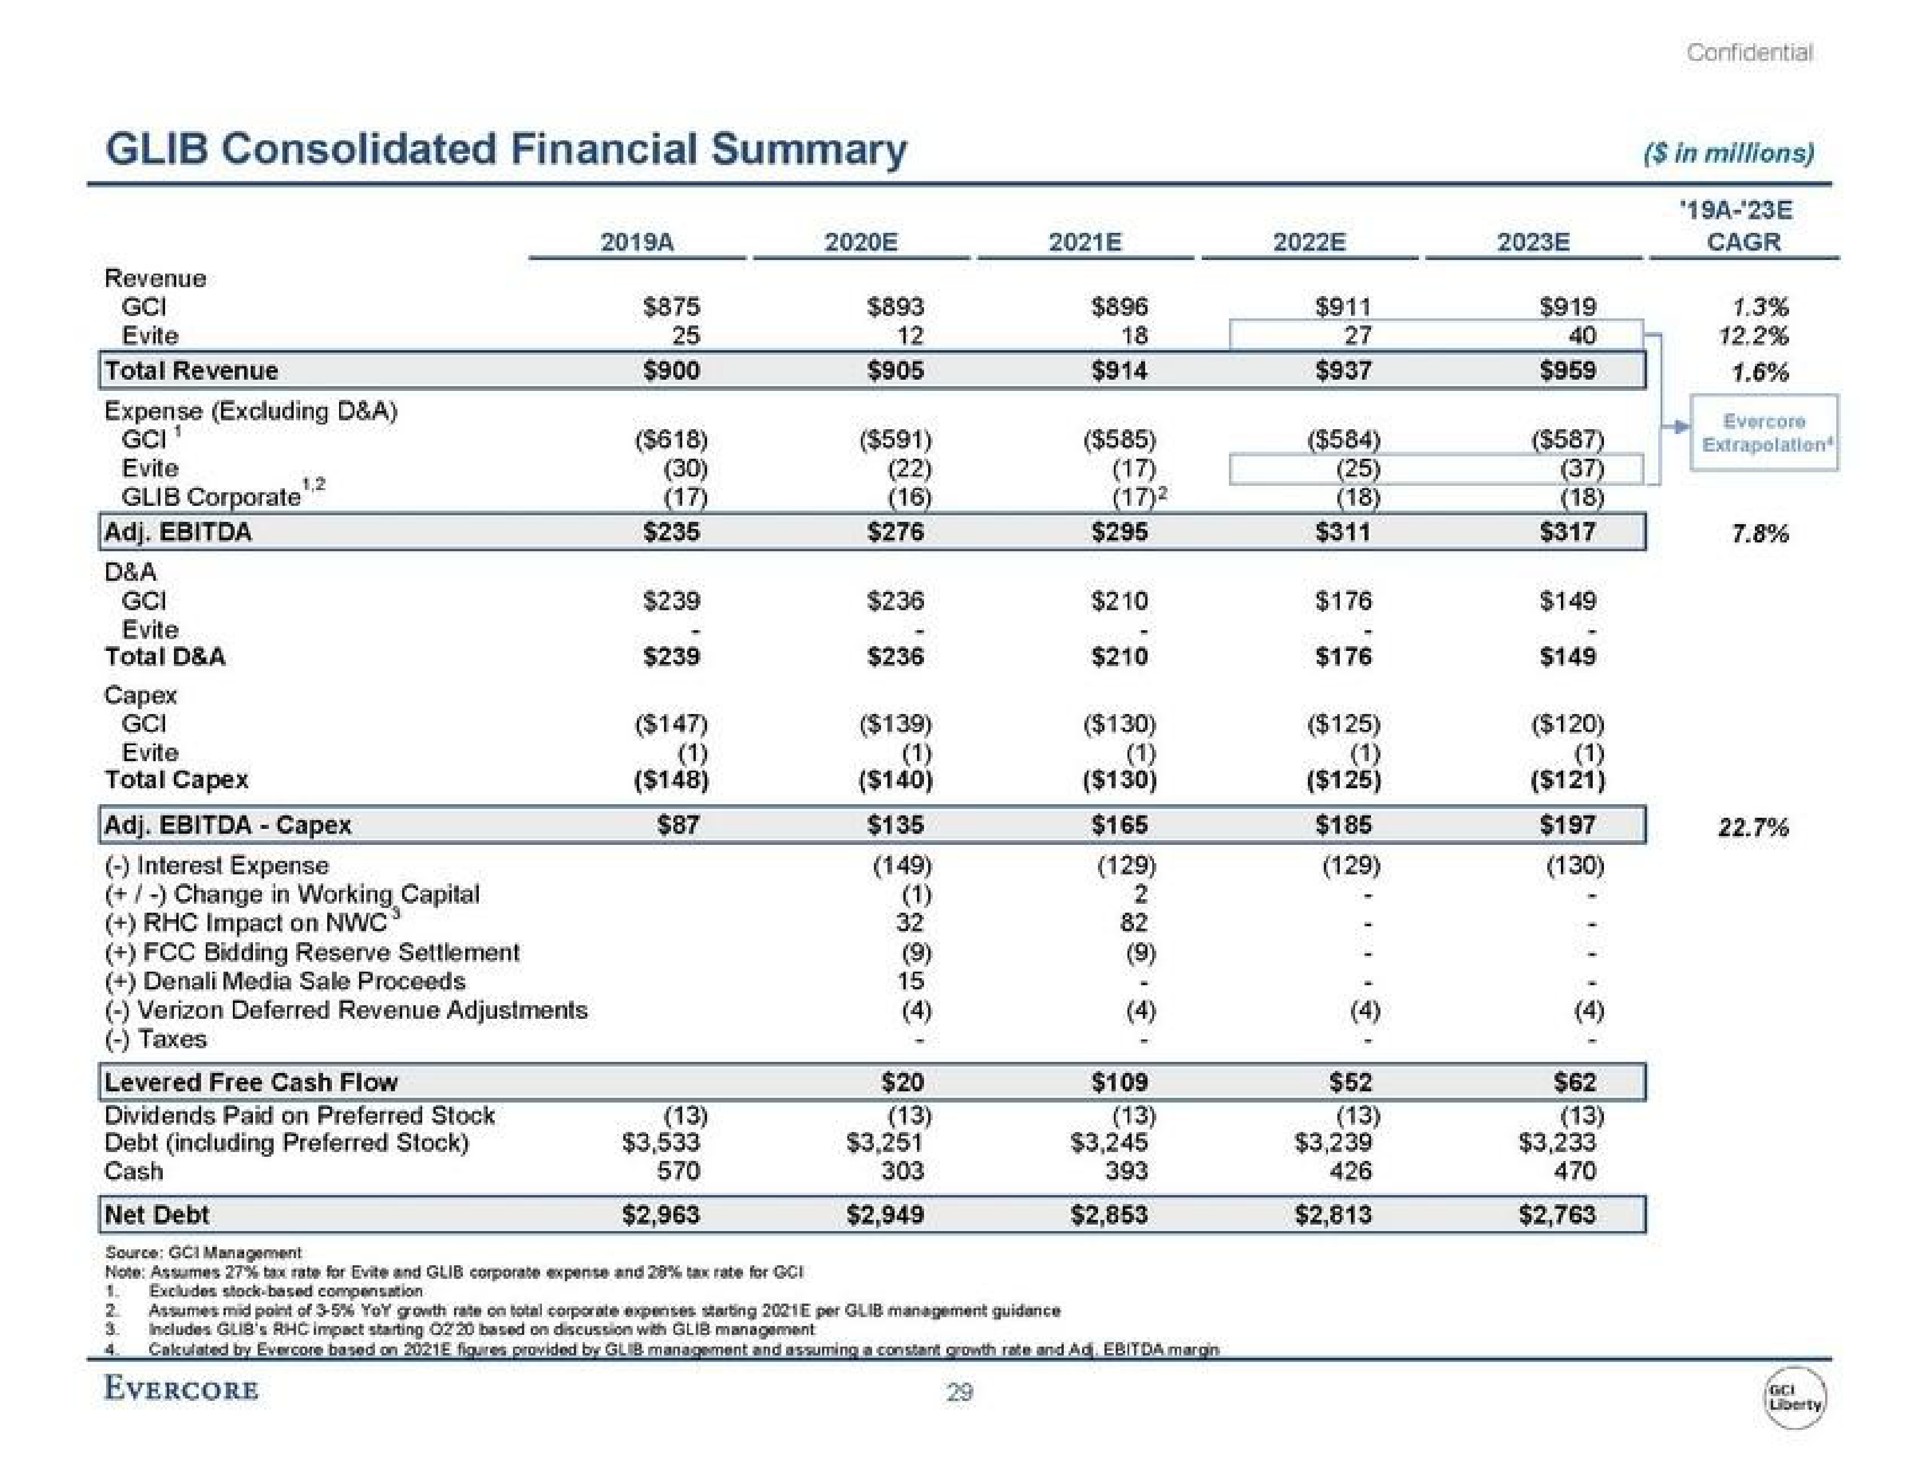 glib consolidated financial summary in millions | Evercore